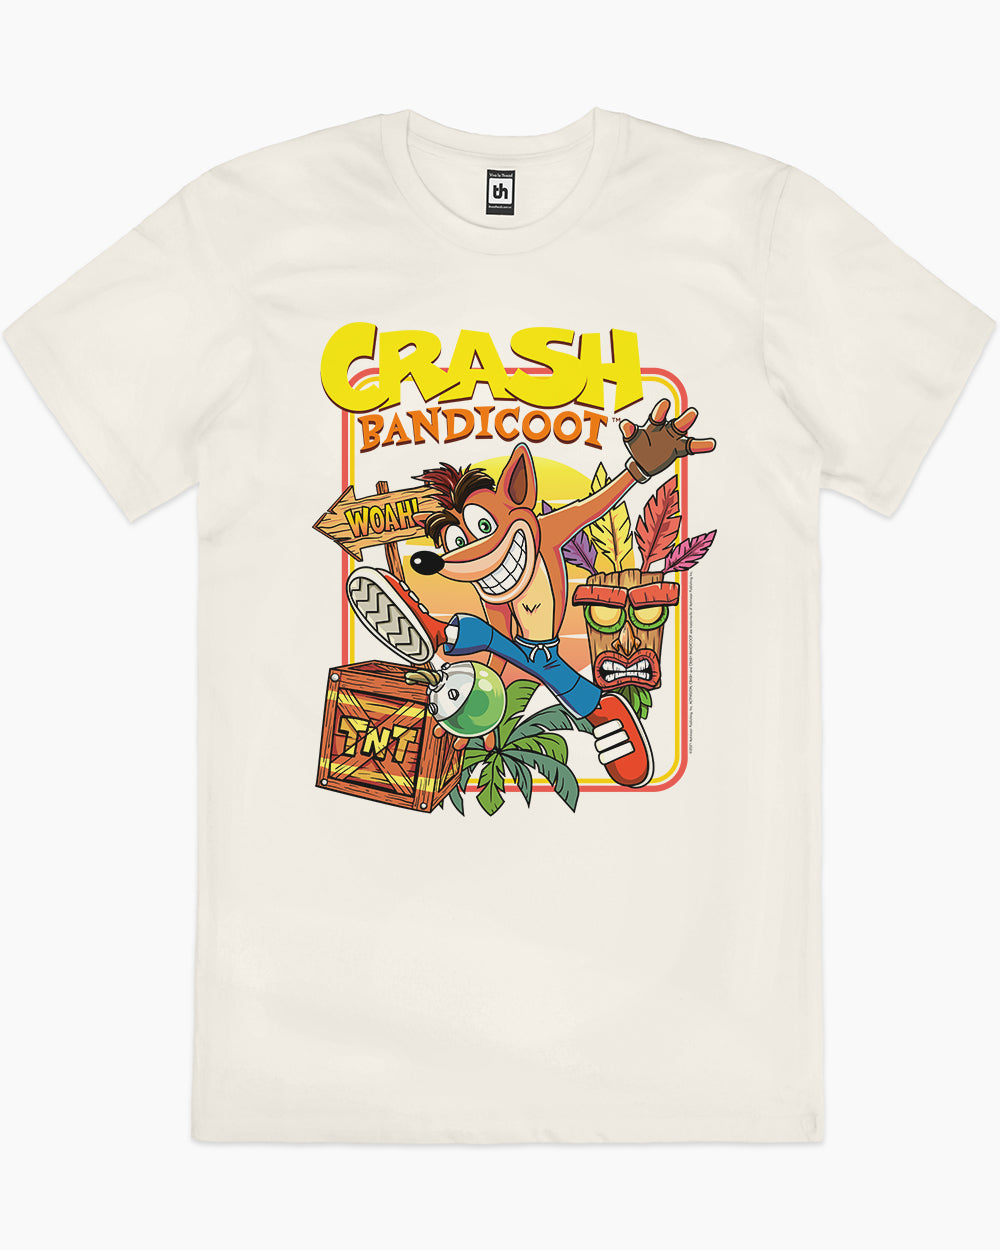 Whoa Crash! T-Shirt